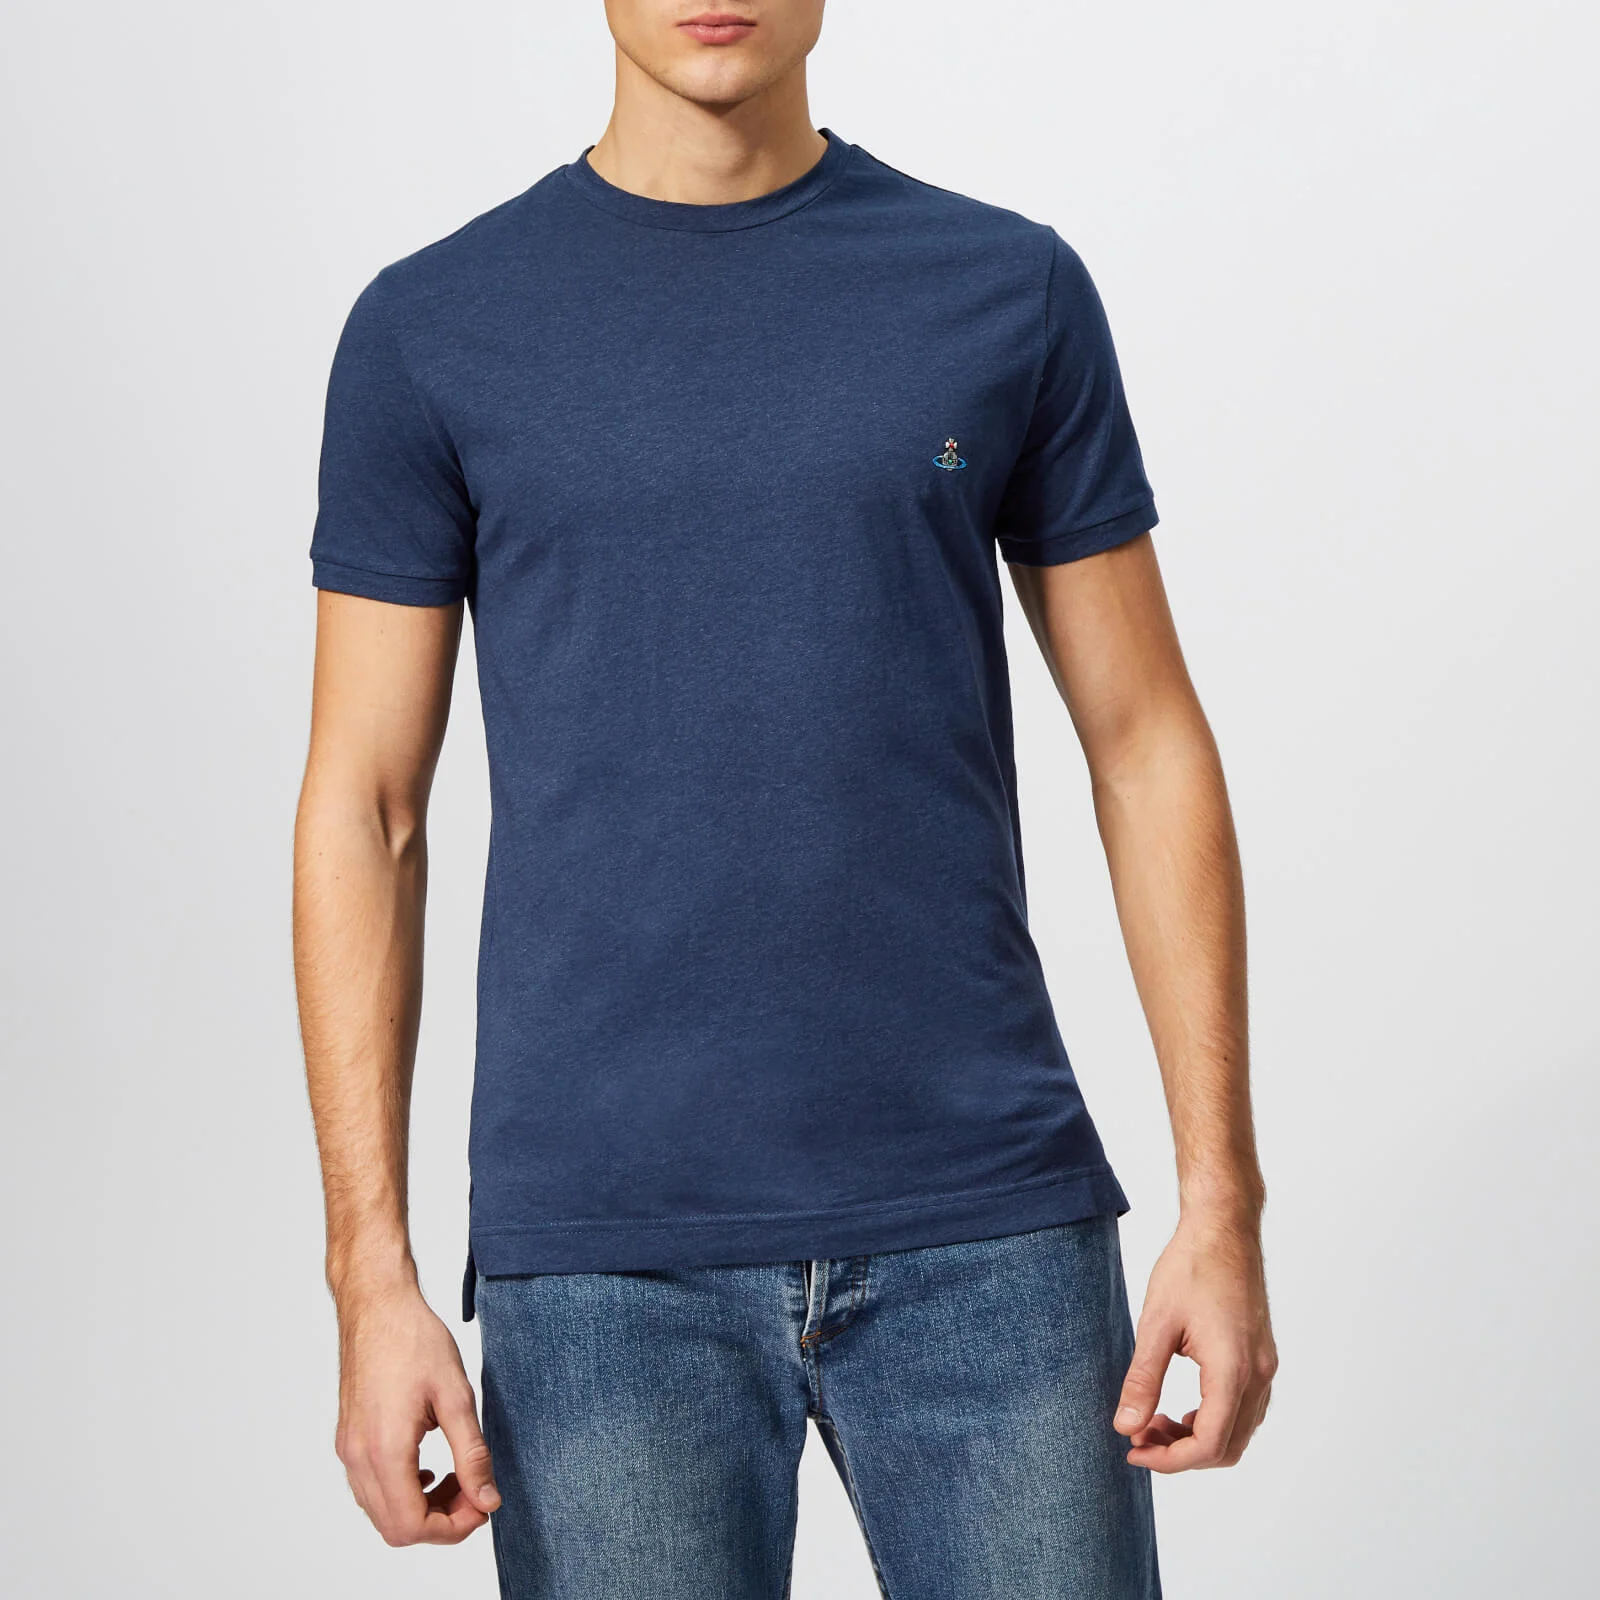 Vivienne Westwood Men's Jersey Peru T-Shirt - Blue Melange Image 1